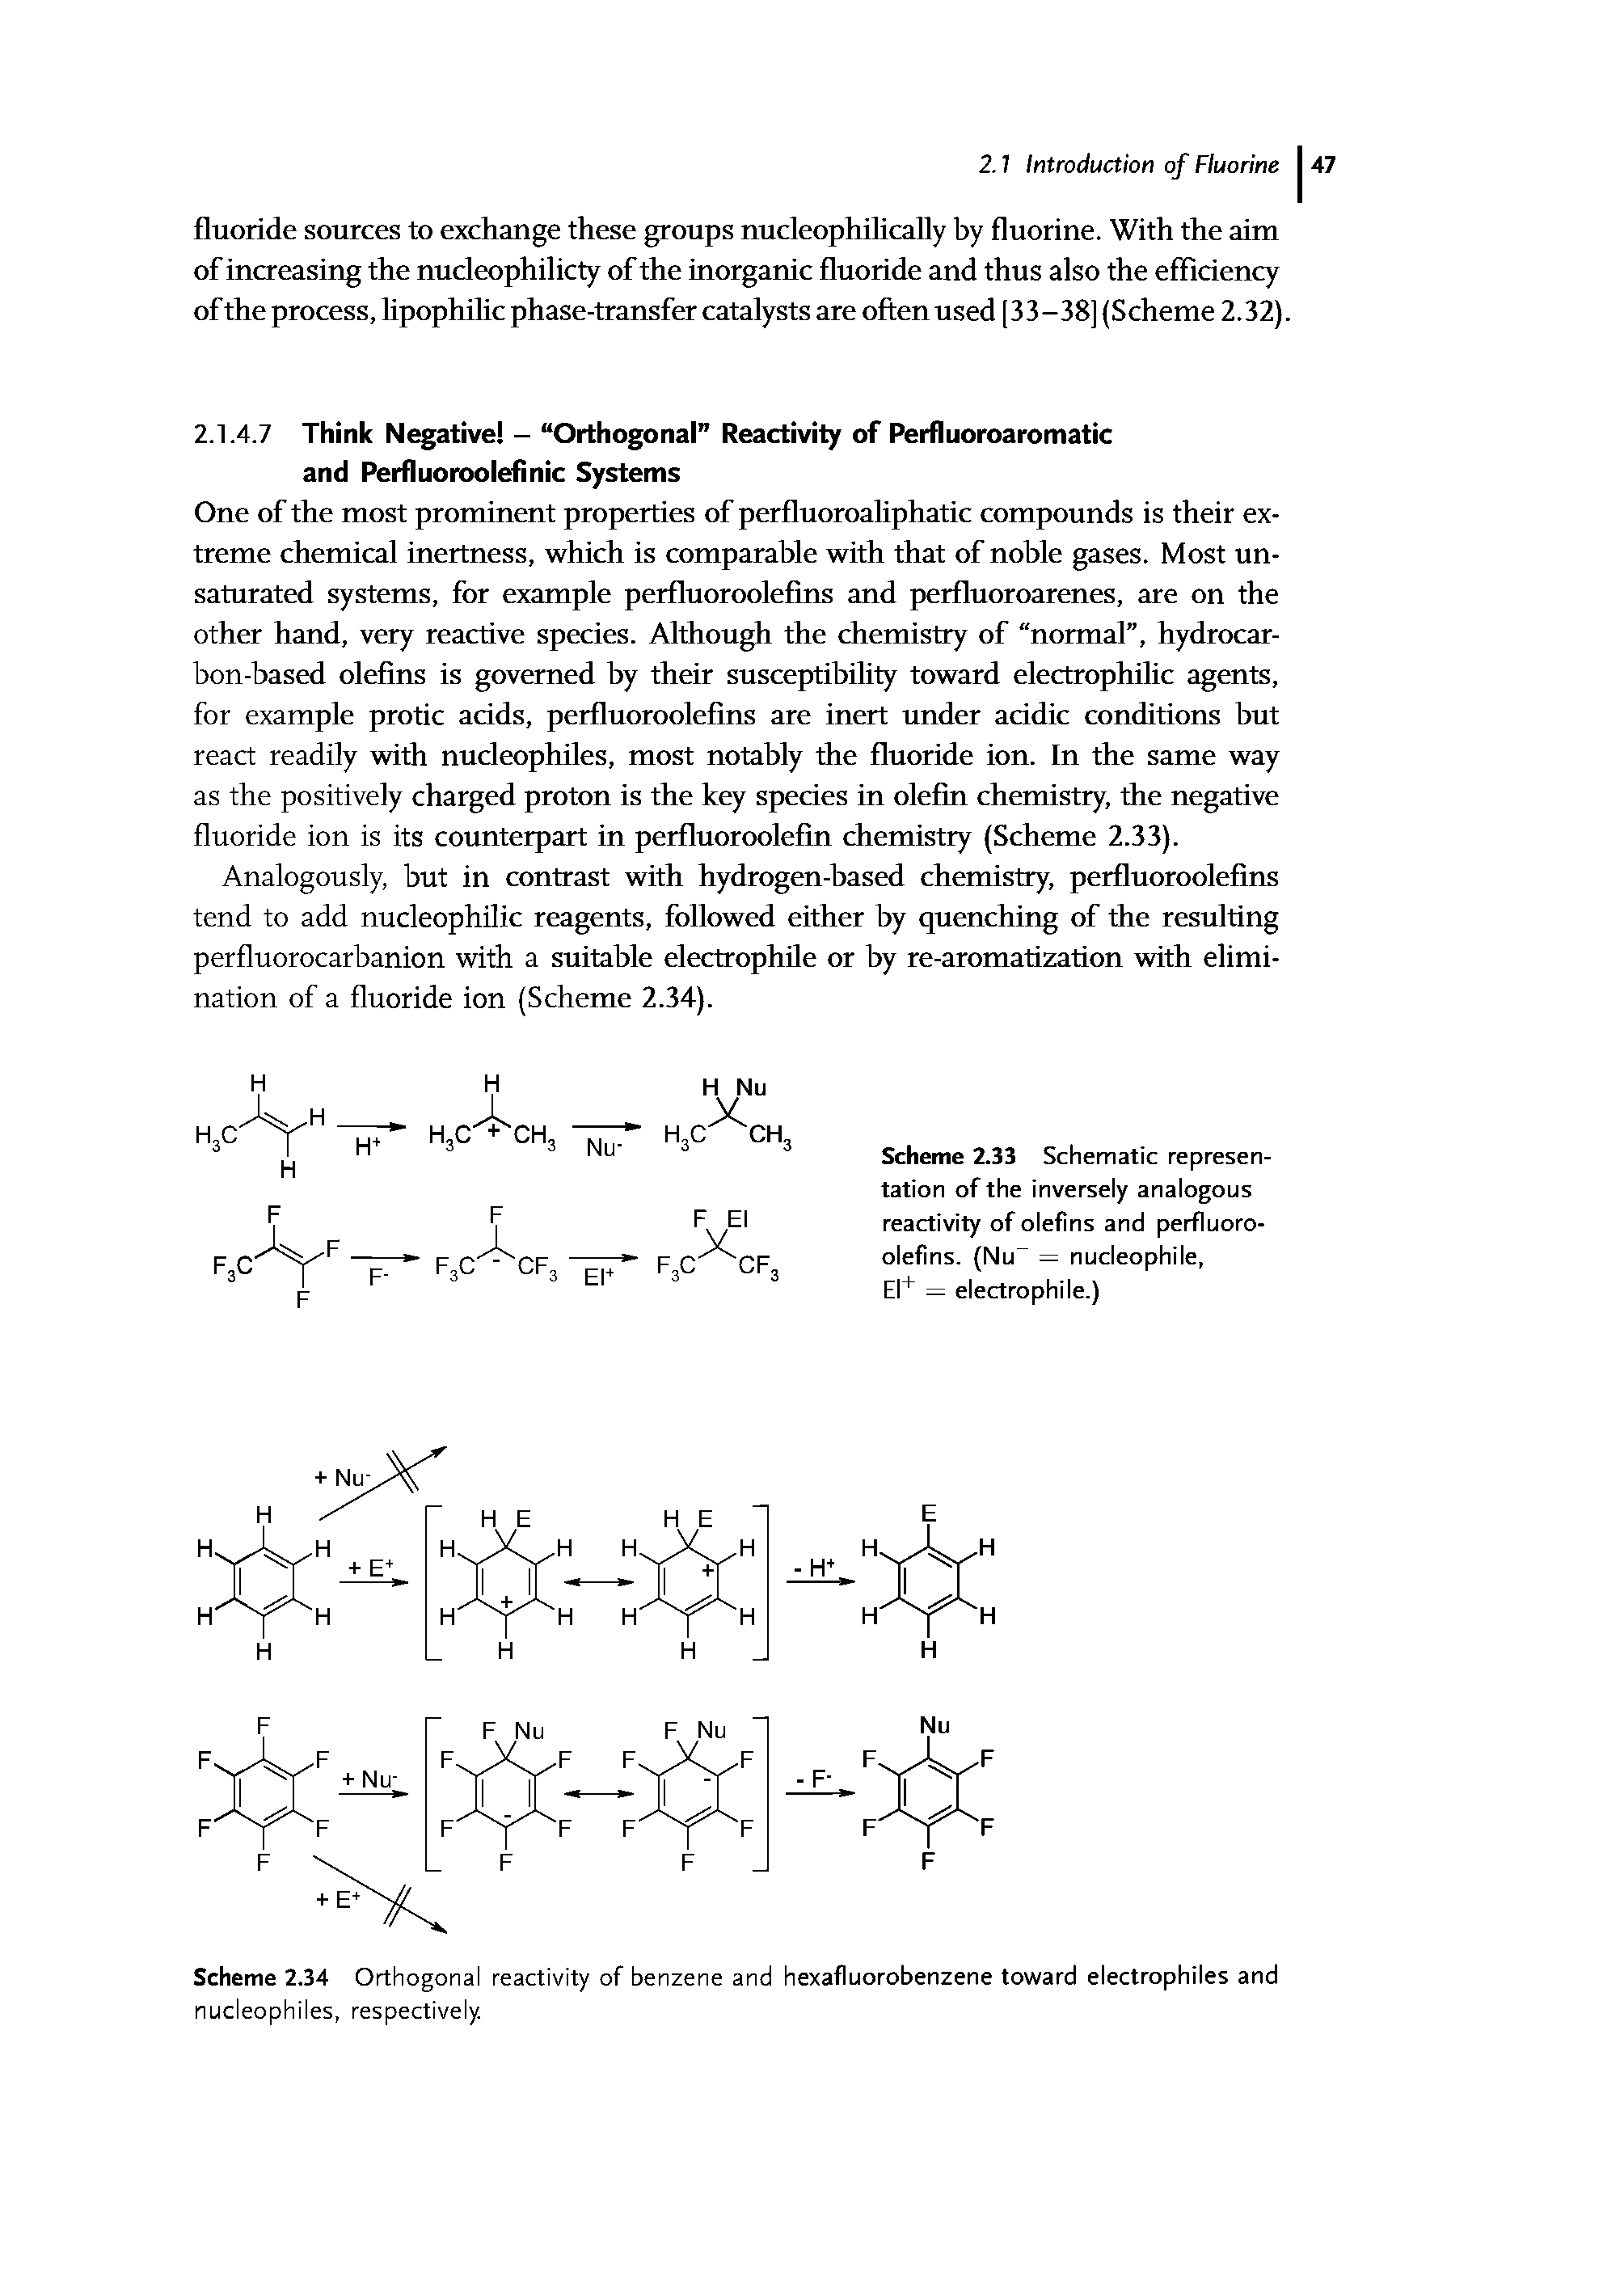 Scheme 2.34 Orthogonal reactivity of benzene and hexafluorobenzene toward electrophiles and nucleophiles, respectively.